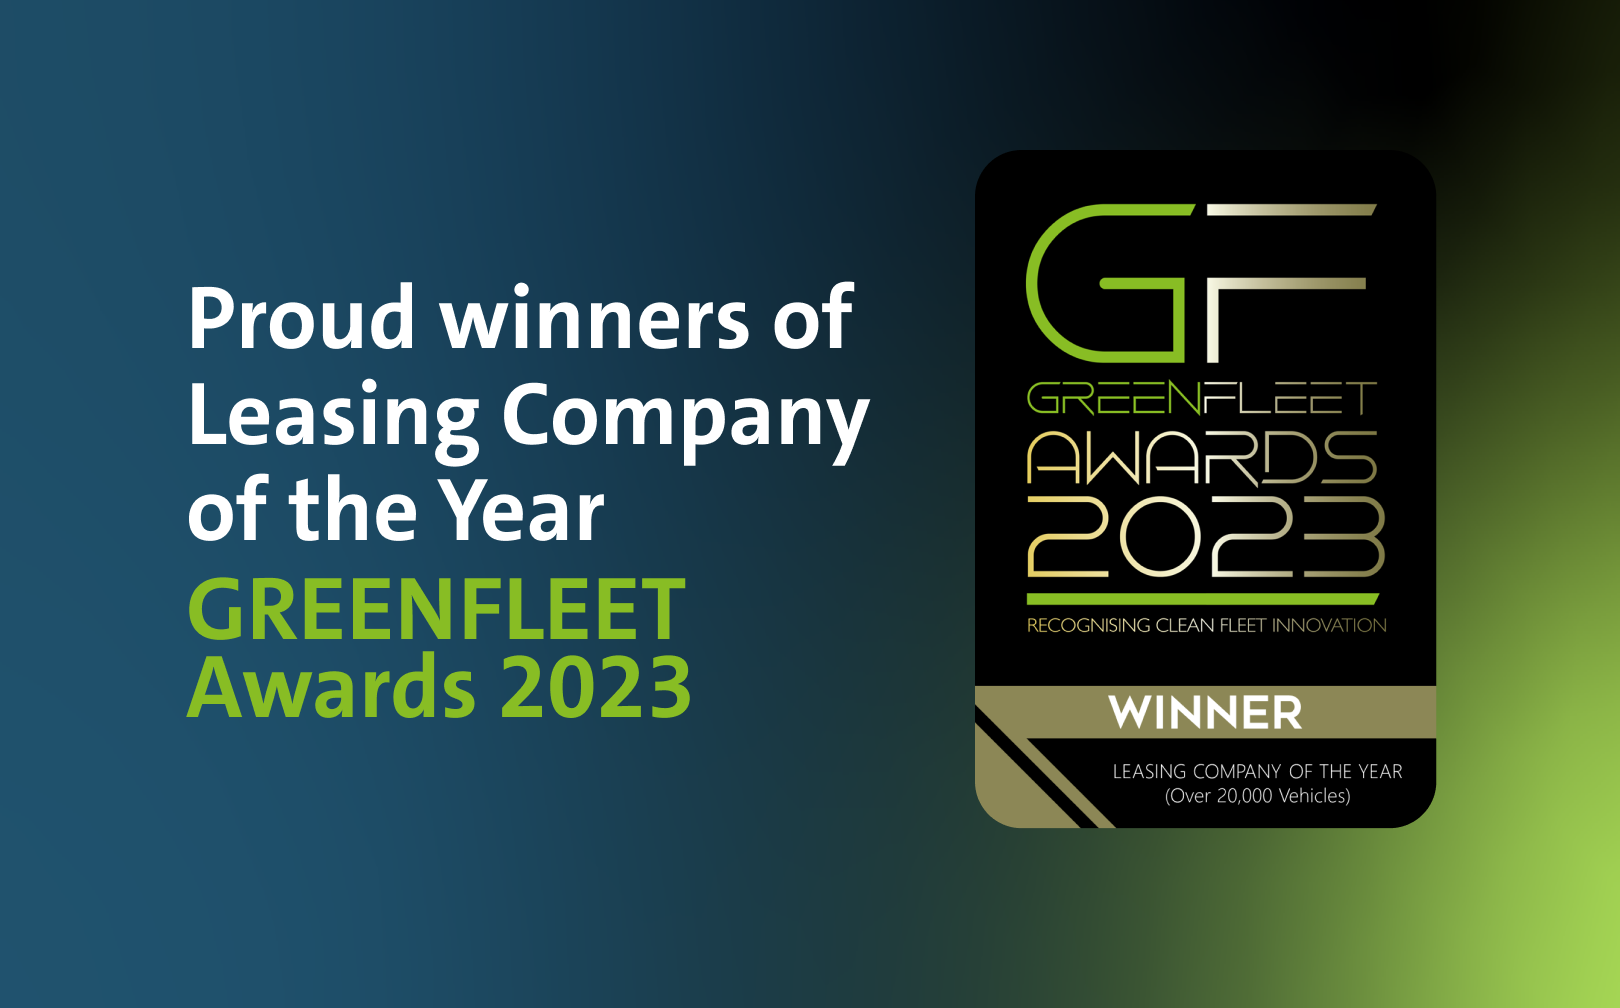 Winners of the Green Fleet Awards 2023